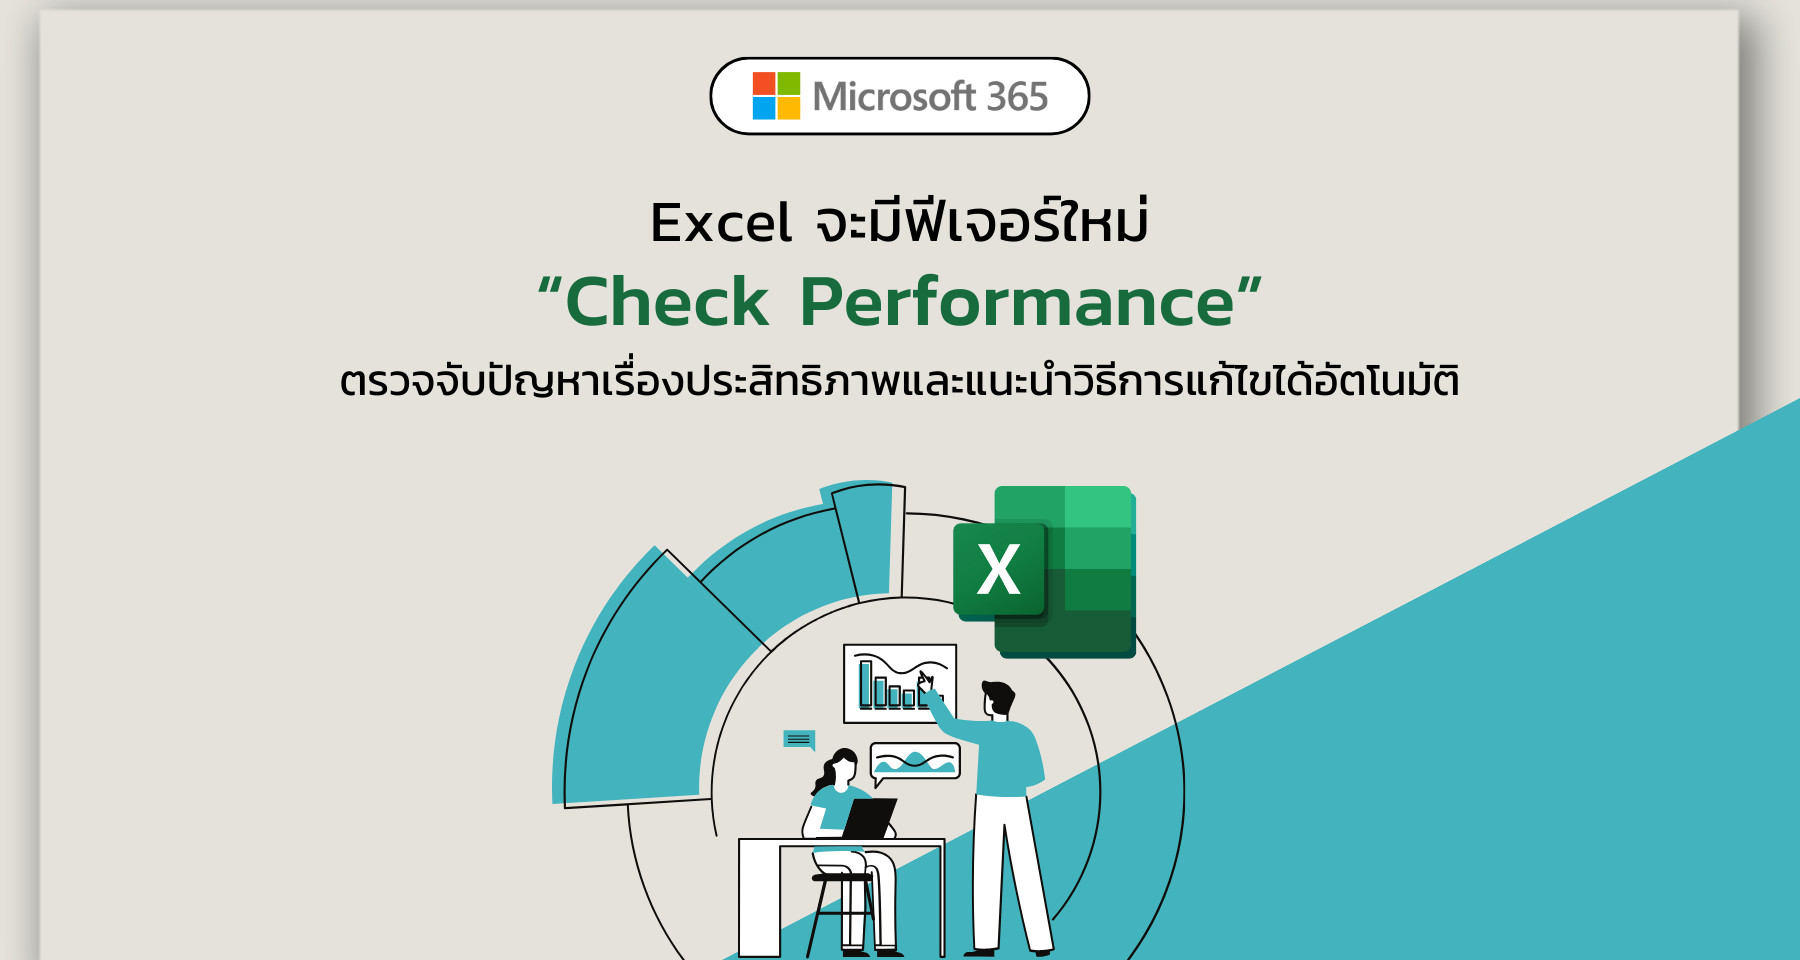 Microsoft 365 Insider ระบุว่า Excel จะมีฟีเจอร์ใหม่ที่ชื่อว่า “Check Performance”